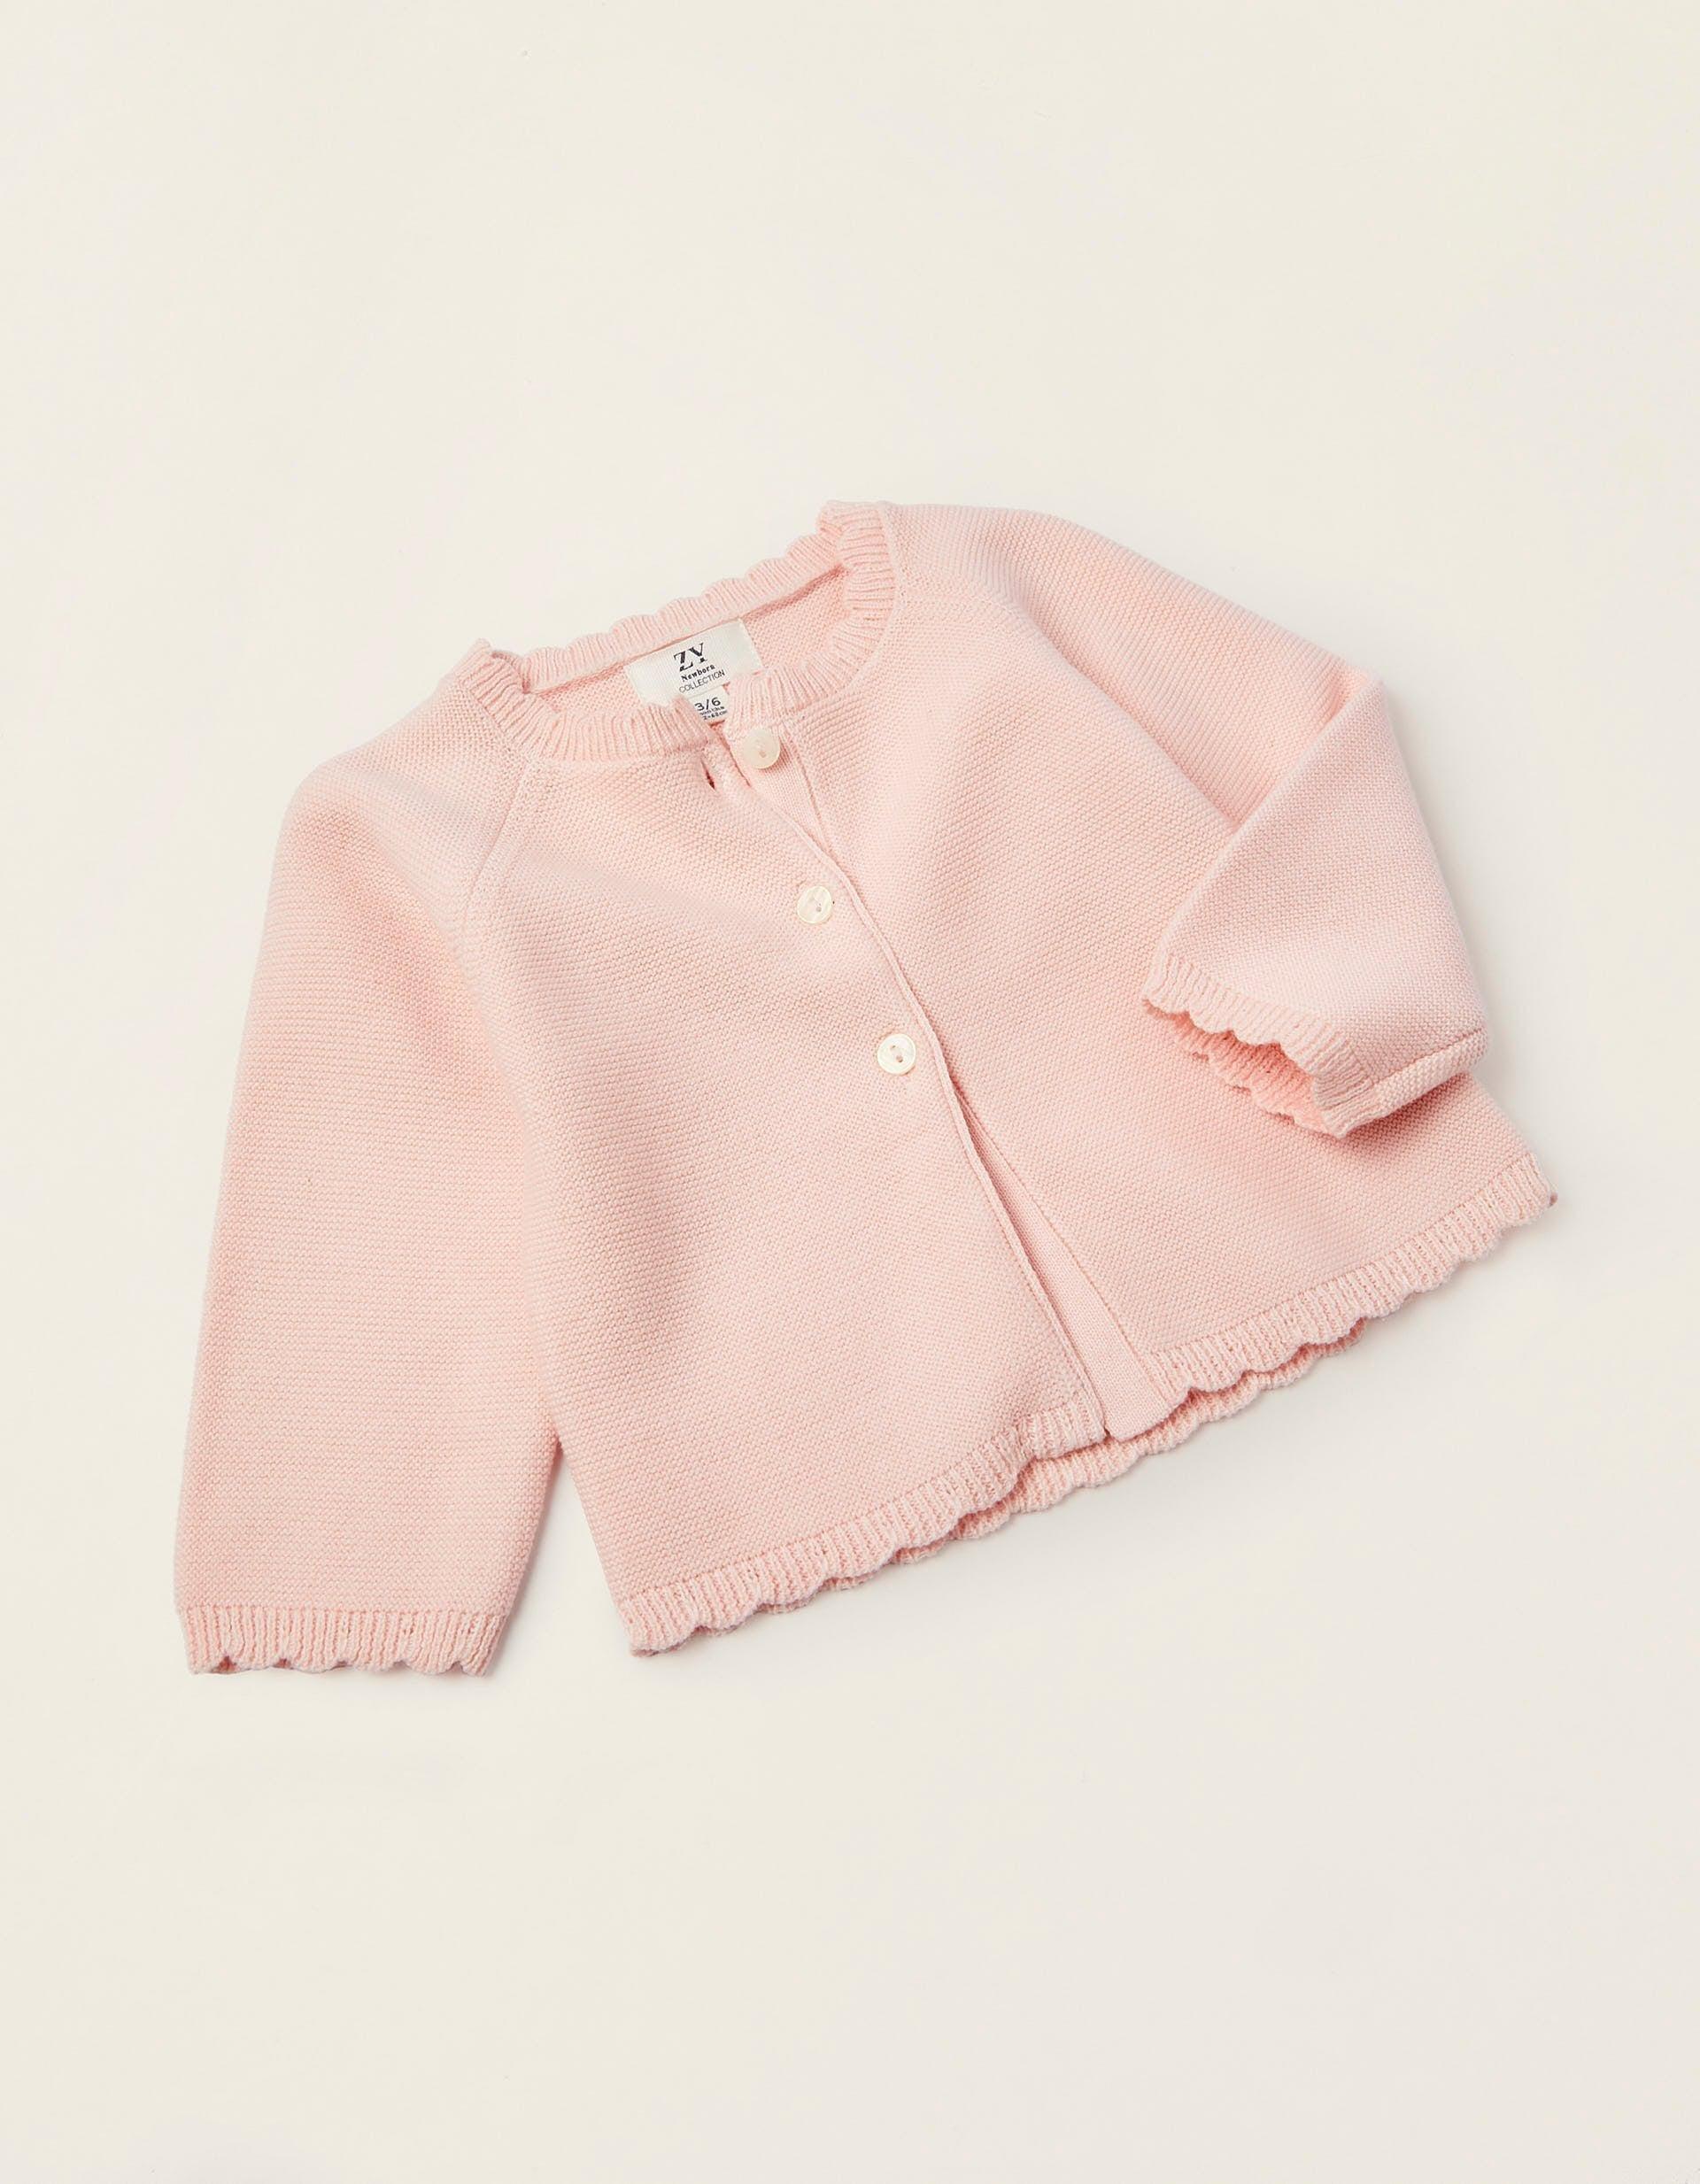 Zippy - Pink Cotton Cardigan, Baby Girls